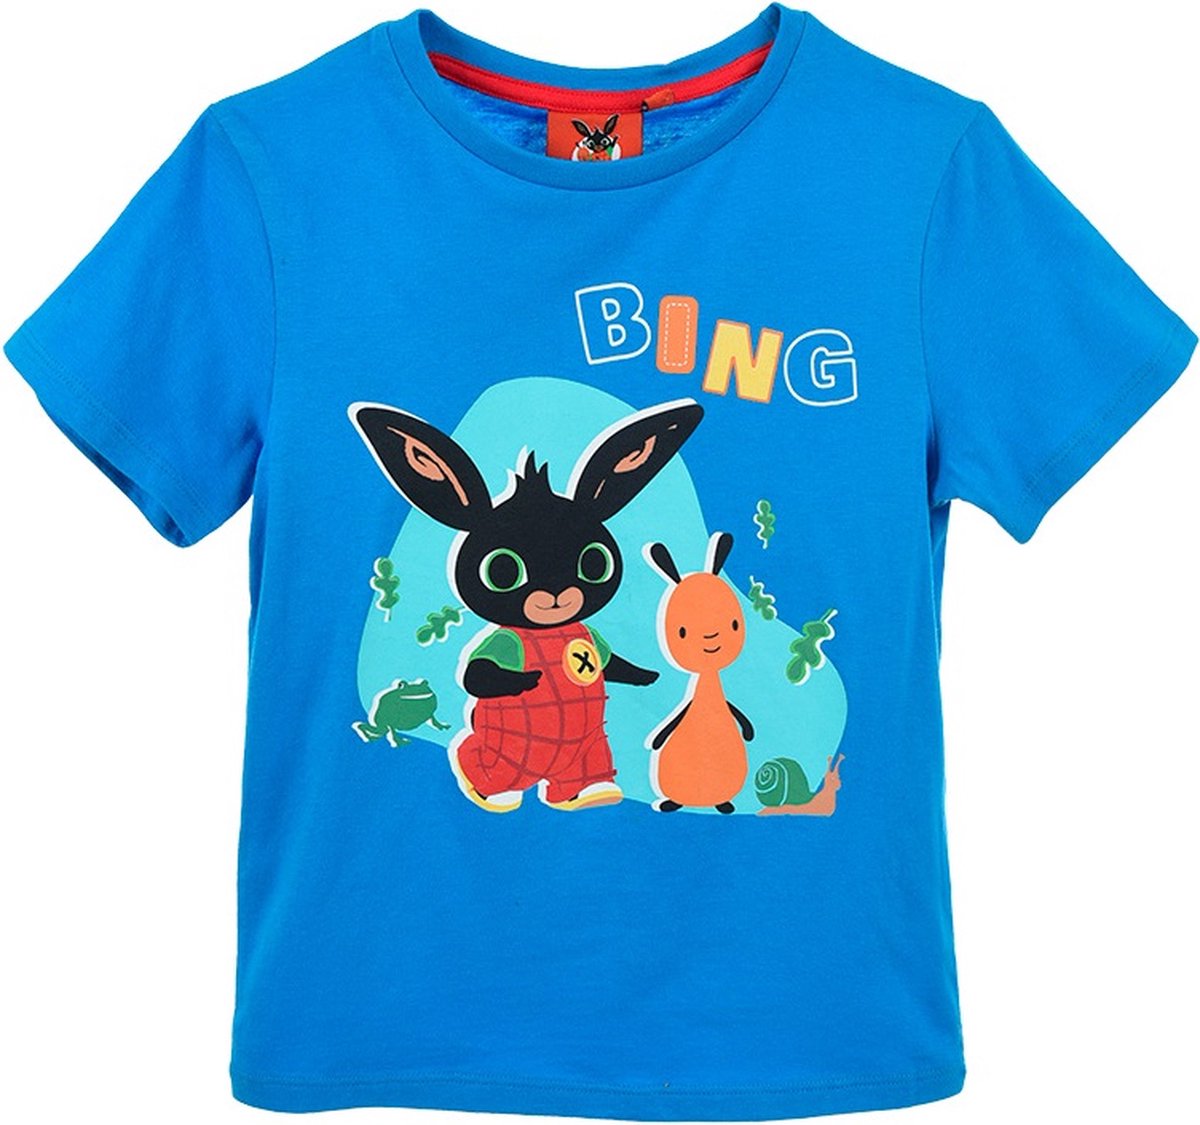 Bing Bunny - T-shirt Bing Bunny - blauw - maat 98